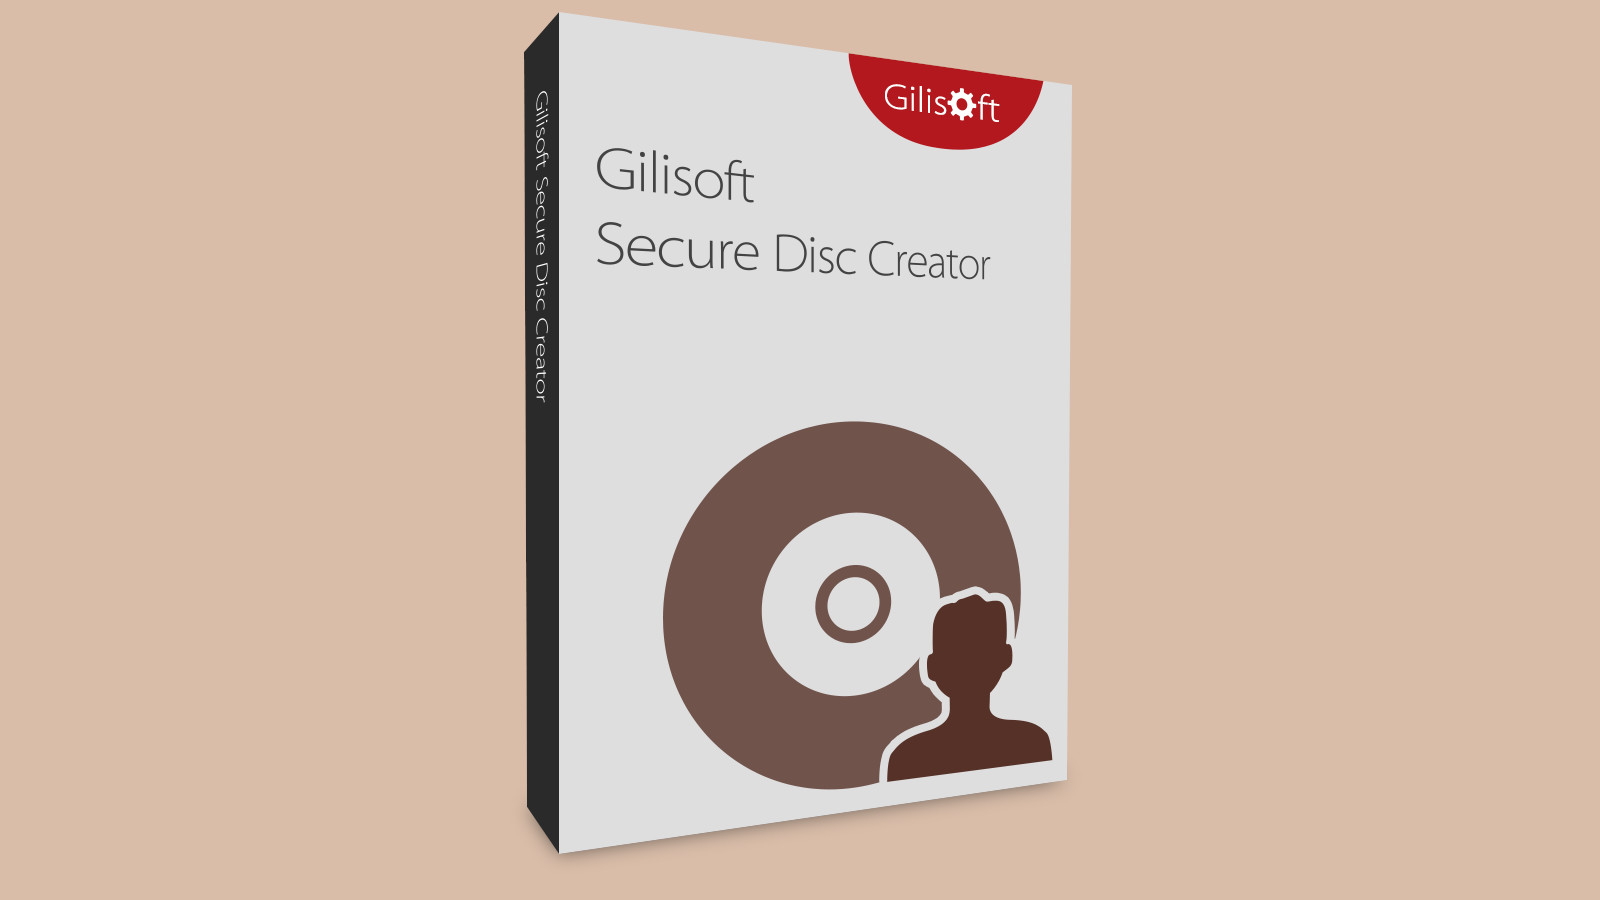 Gilisoft Secure Disc Creator CD Key, $6.84